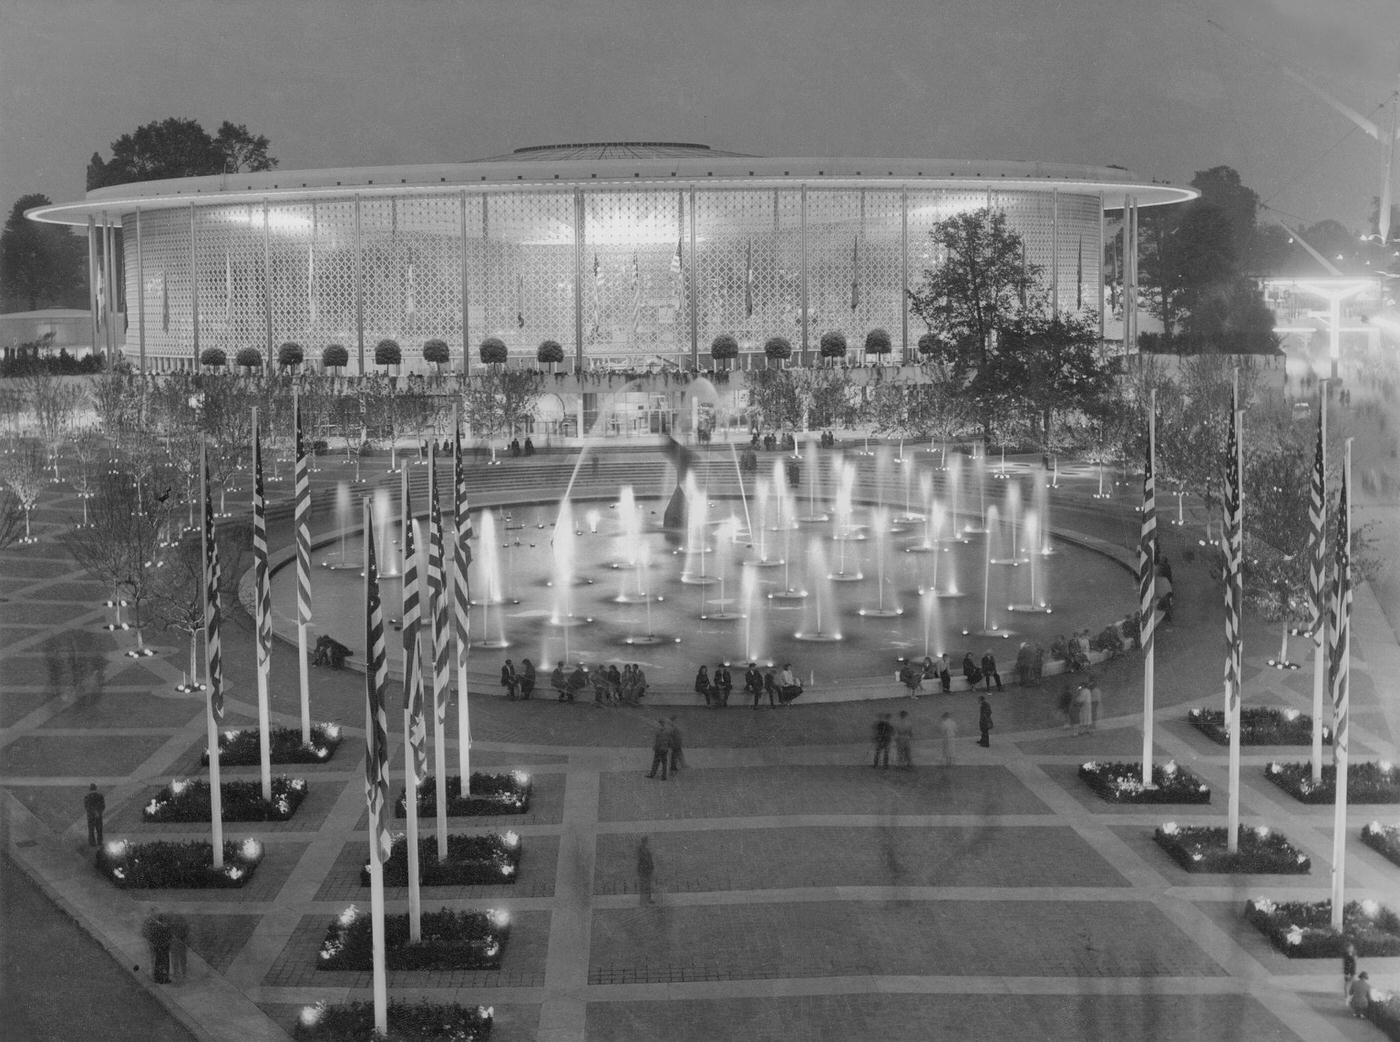 American Pavilion by night, Architect Edward Durell Stone, cupola